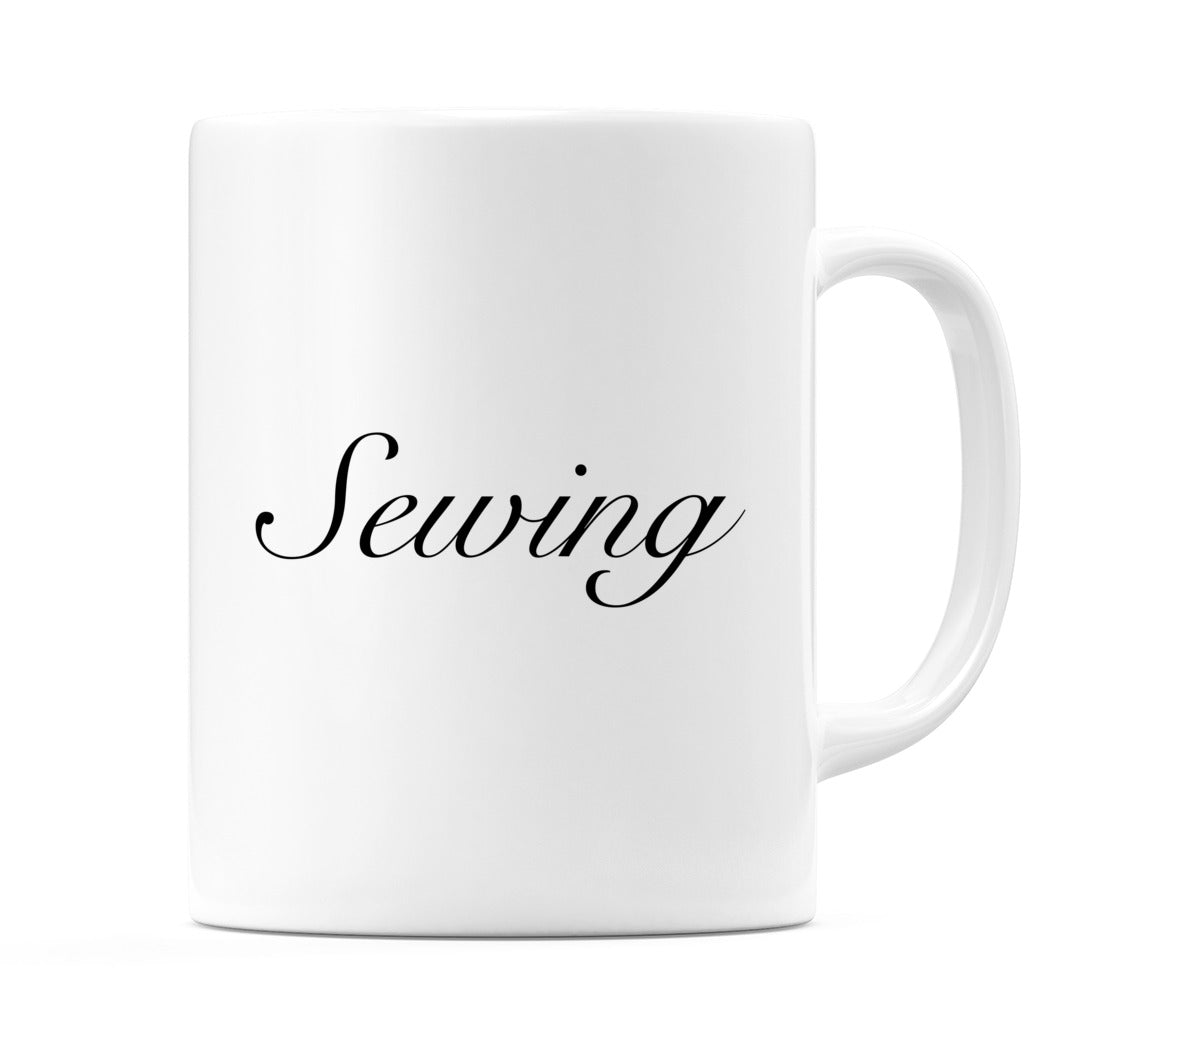 Sewing Mug